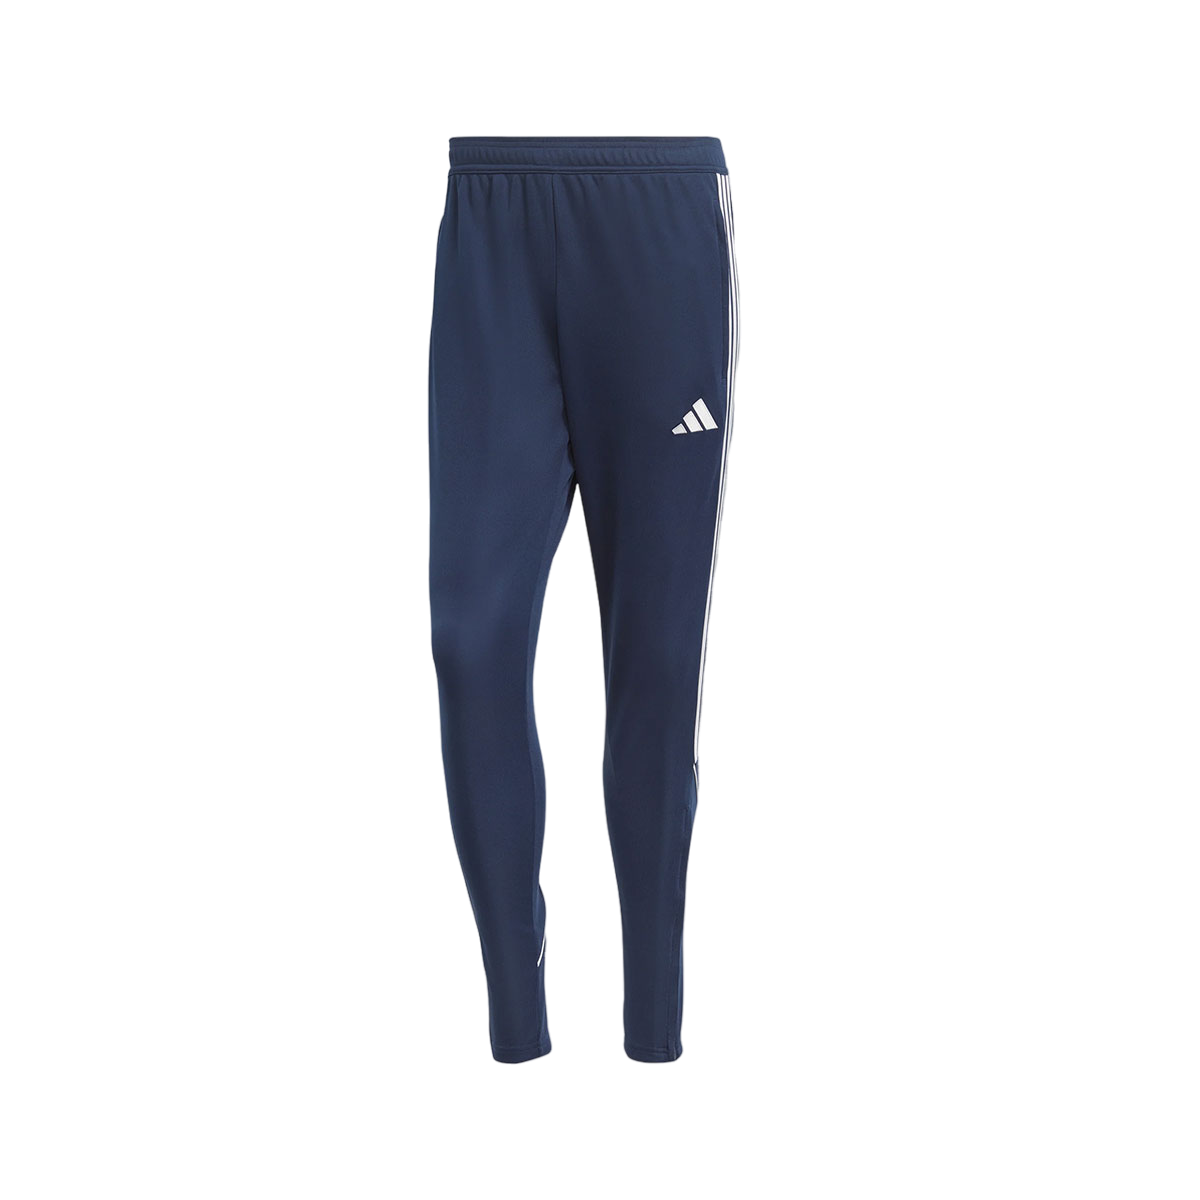 Adidas Men's Tiro 23 League Pants Navy Blue